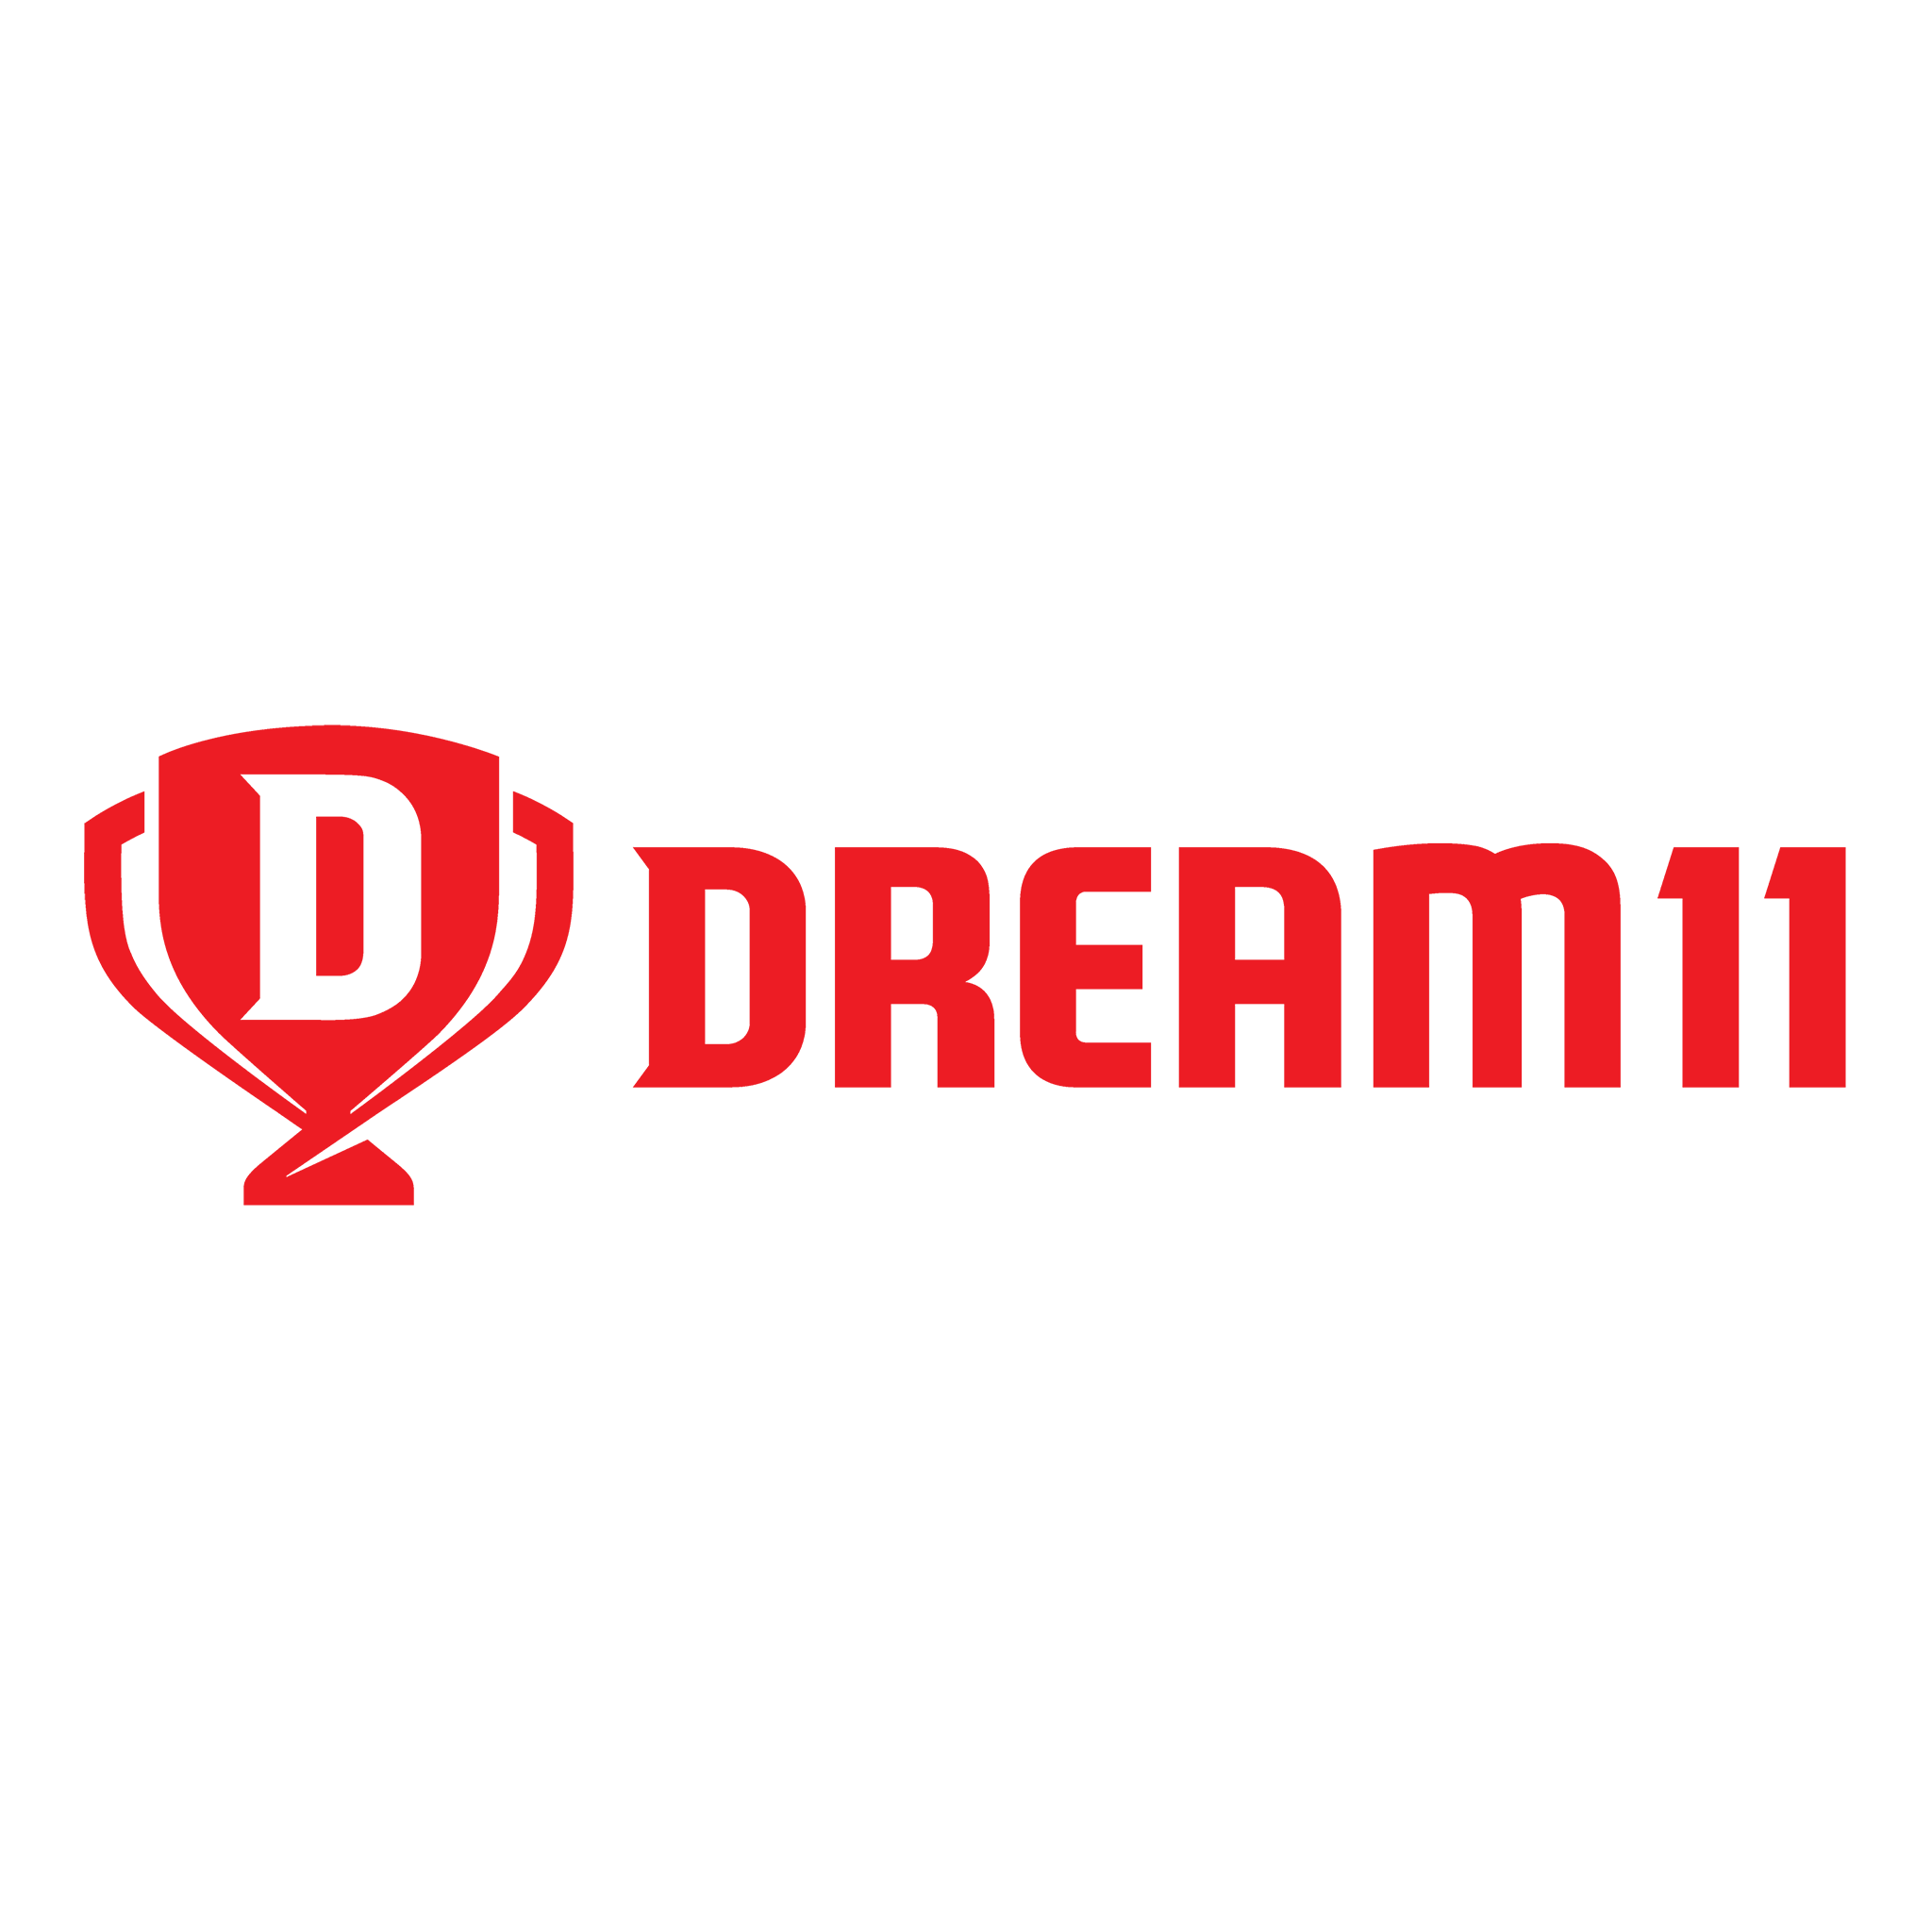 DREAM 11 TEAM